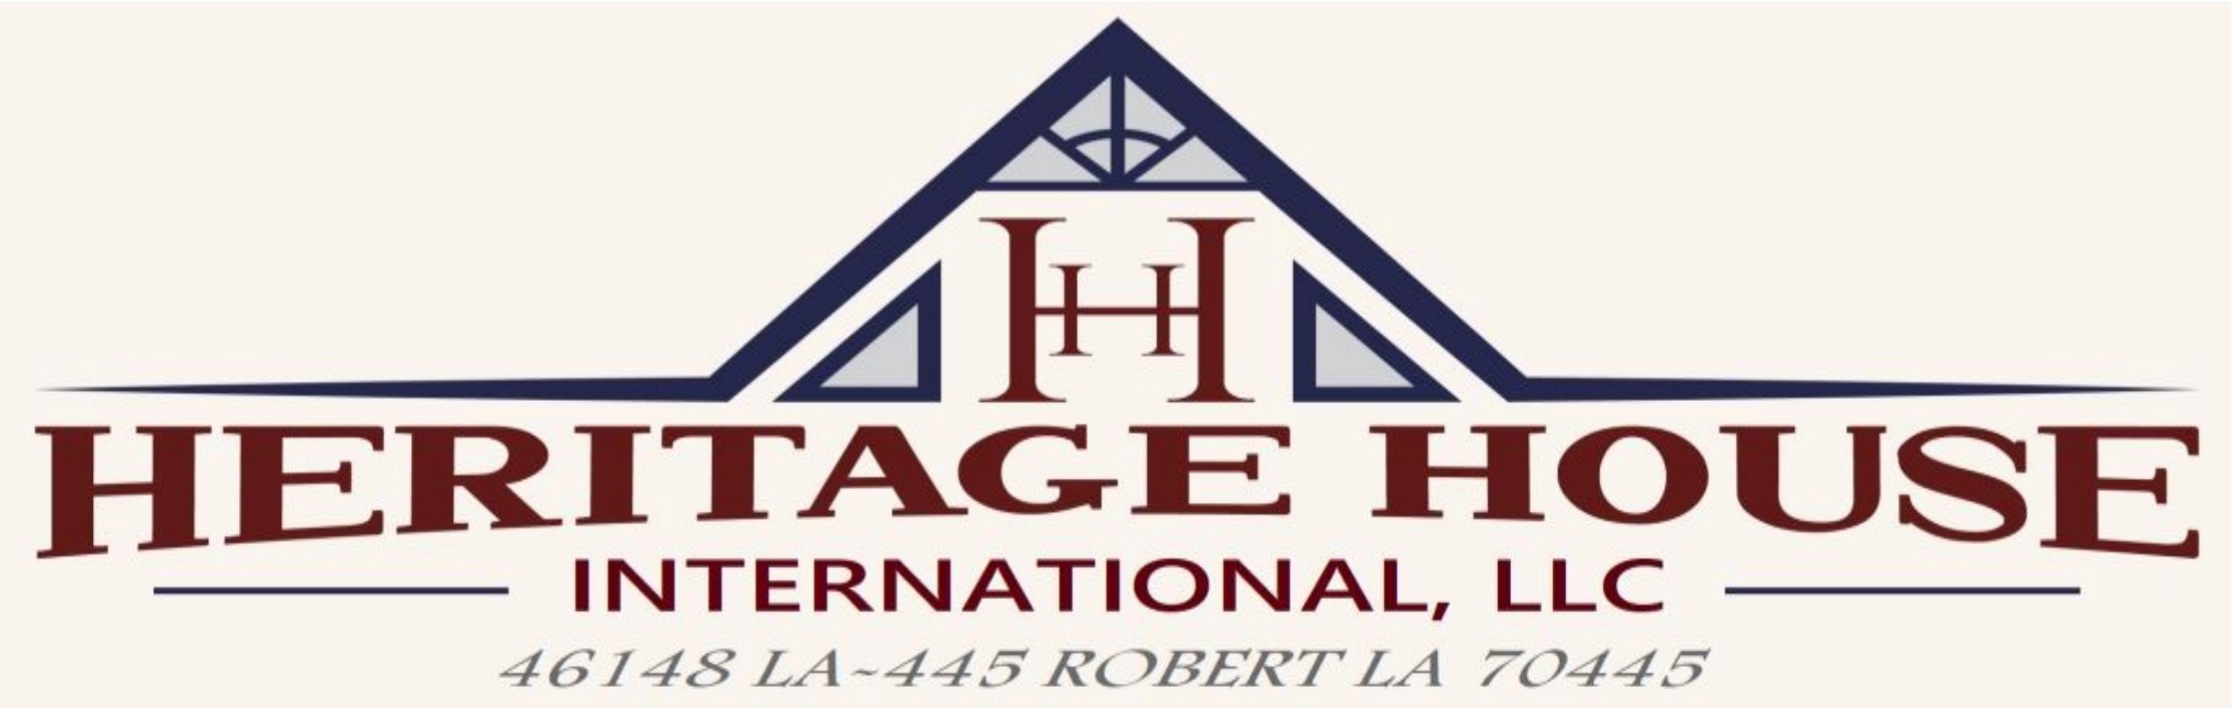 Heritage House International